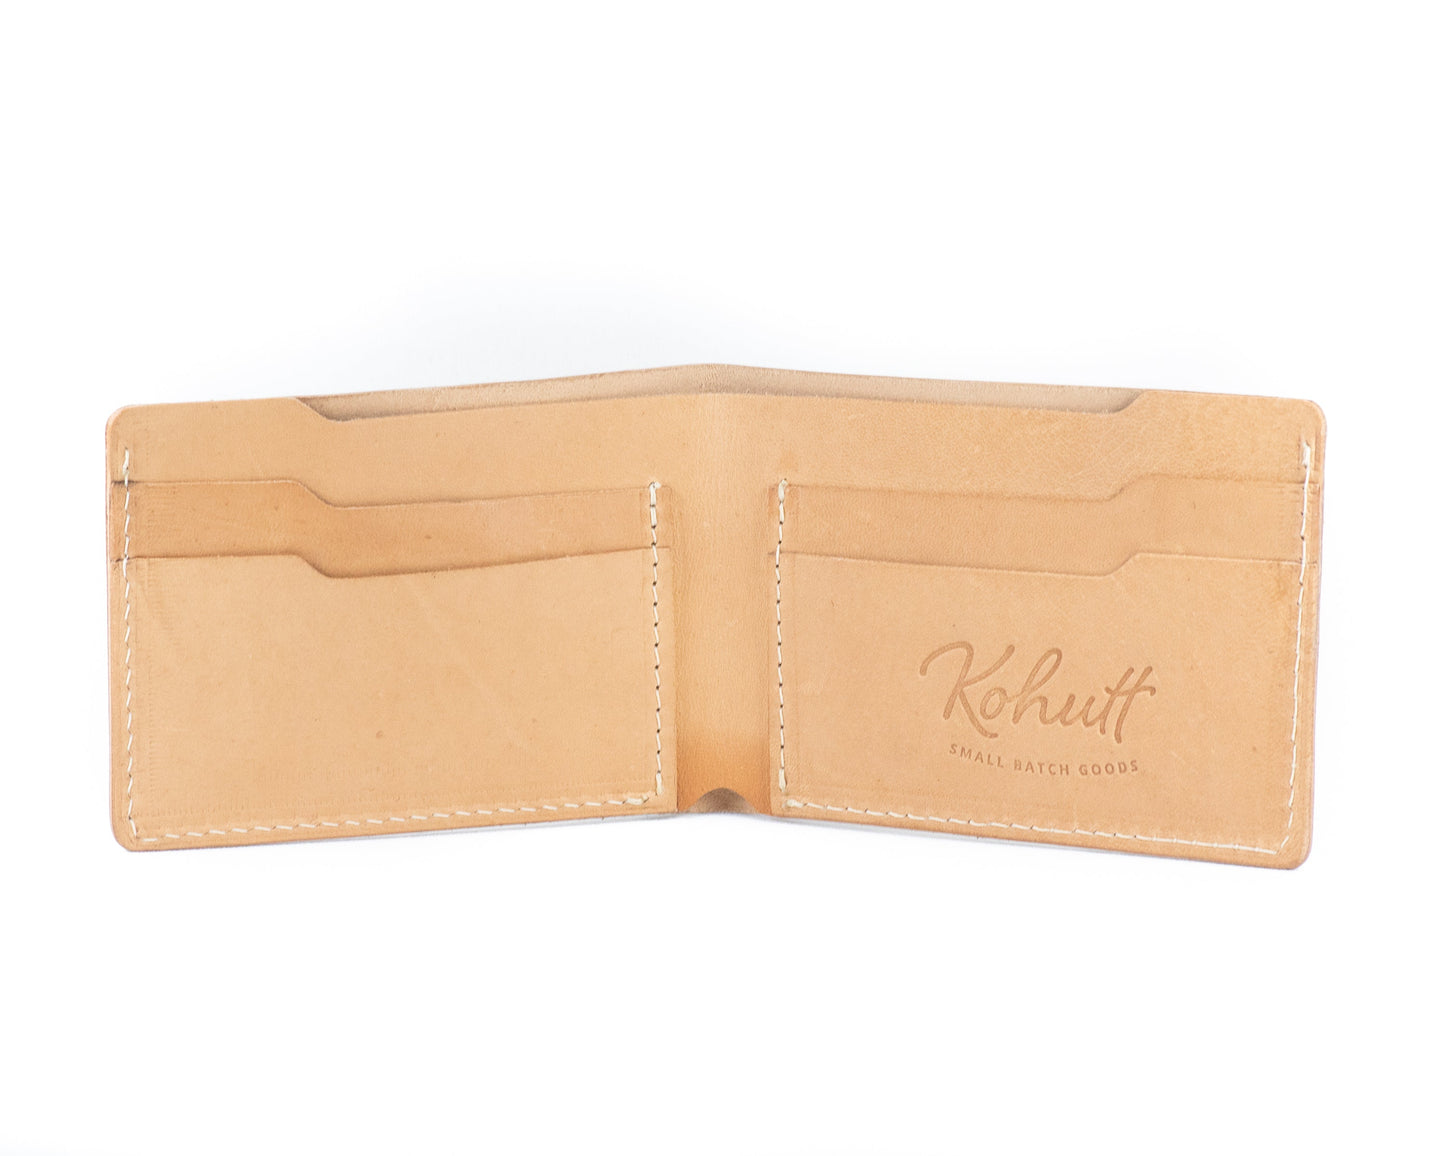 Classic bifold slim wallet in natural Kangaroo leather - Kohutt™ - made in Tasmania